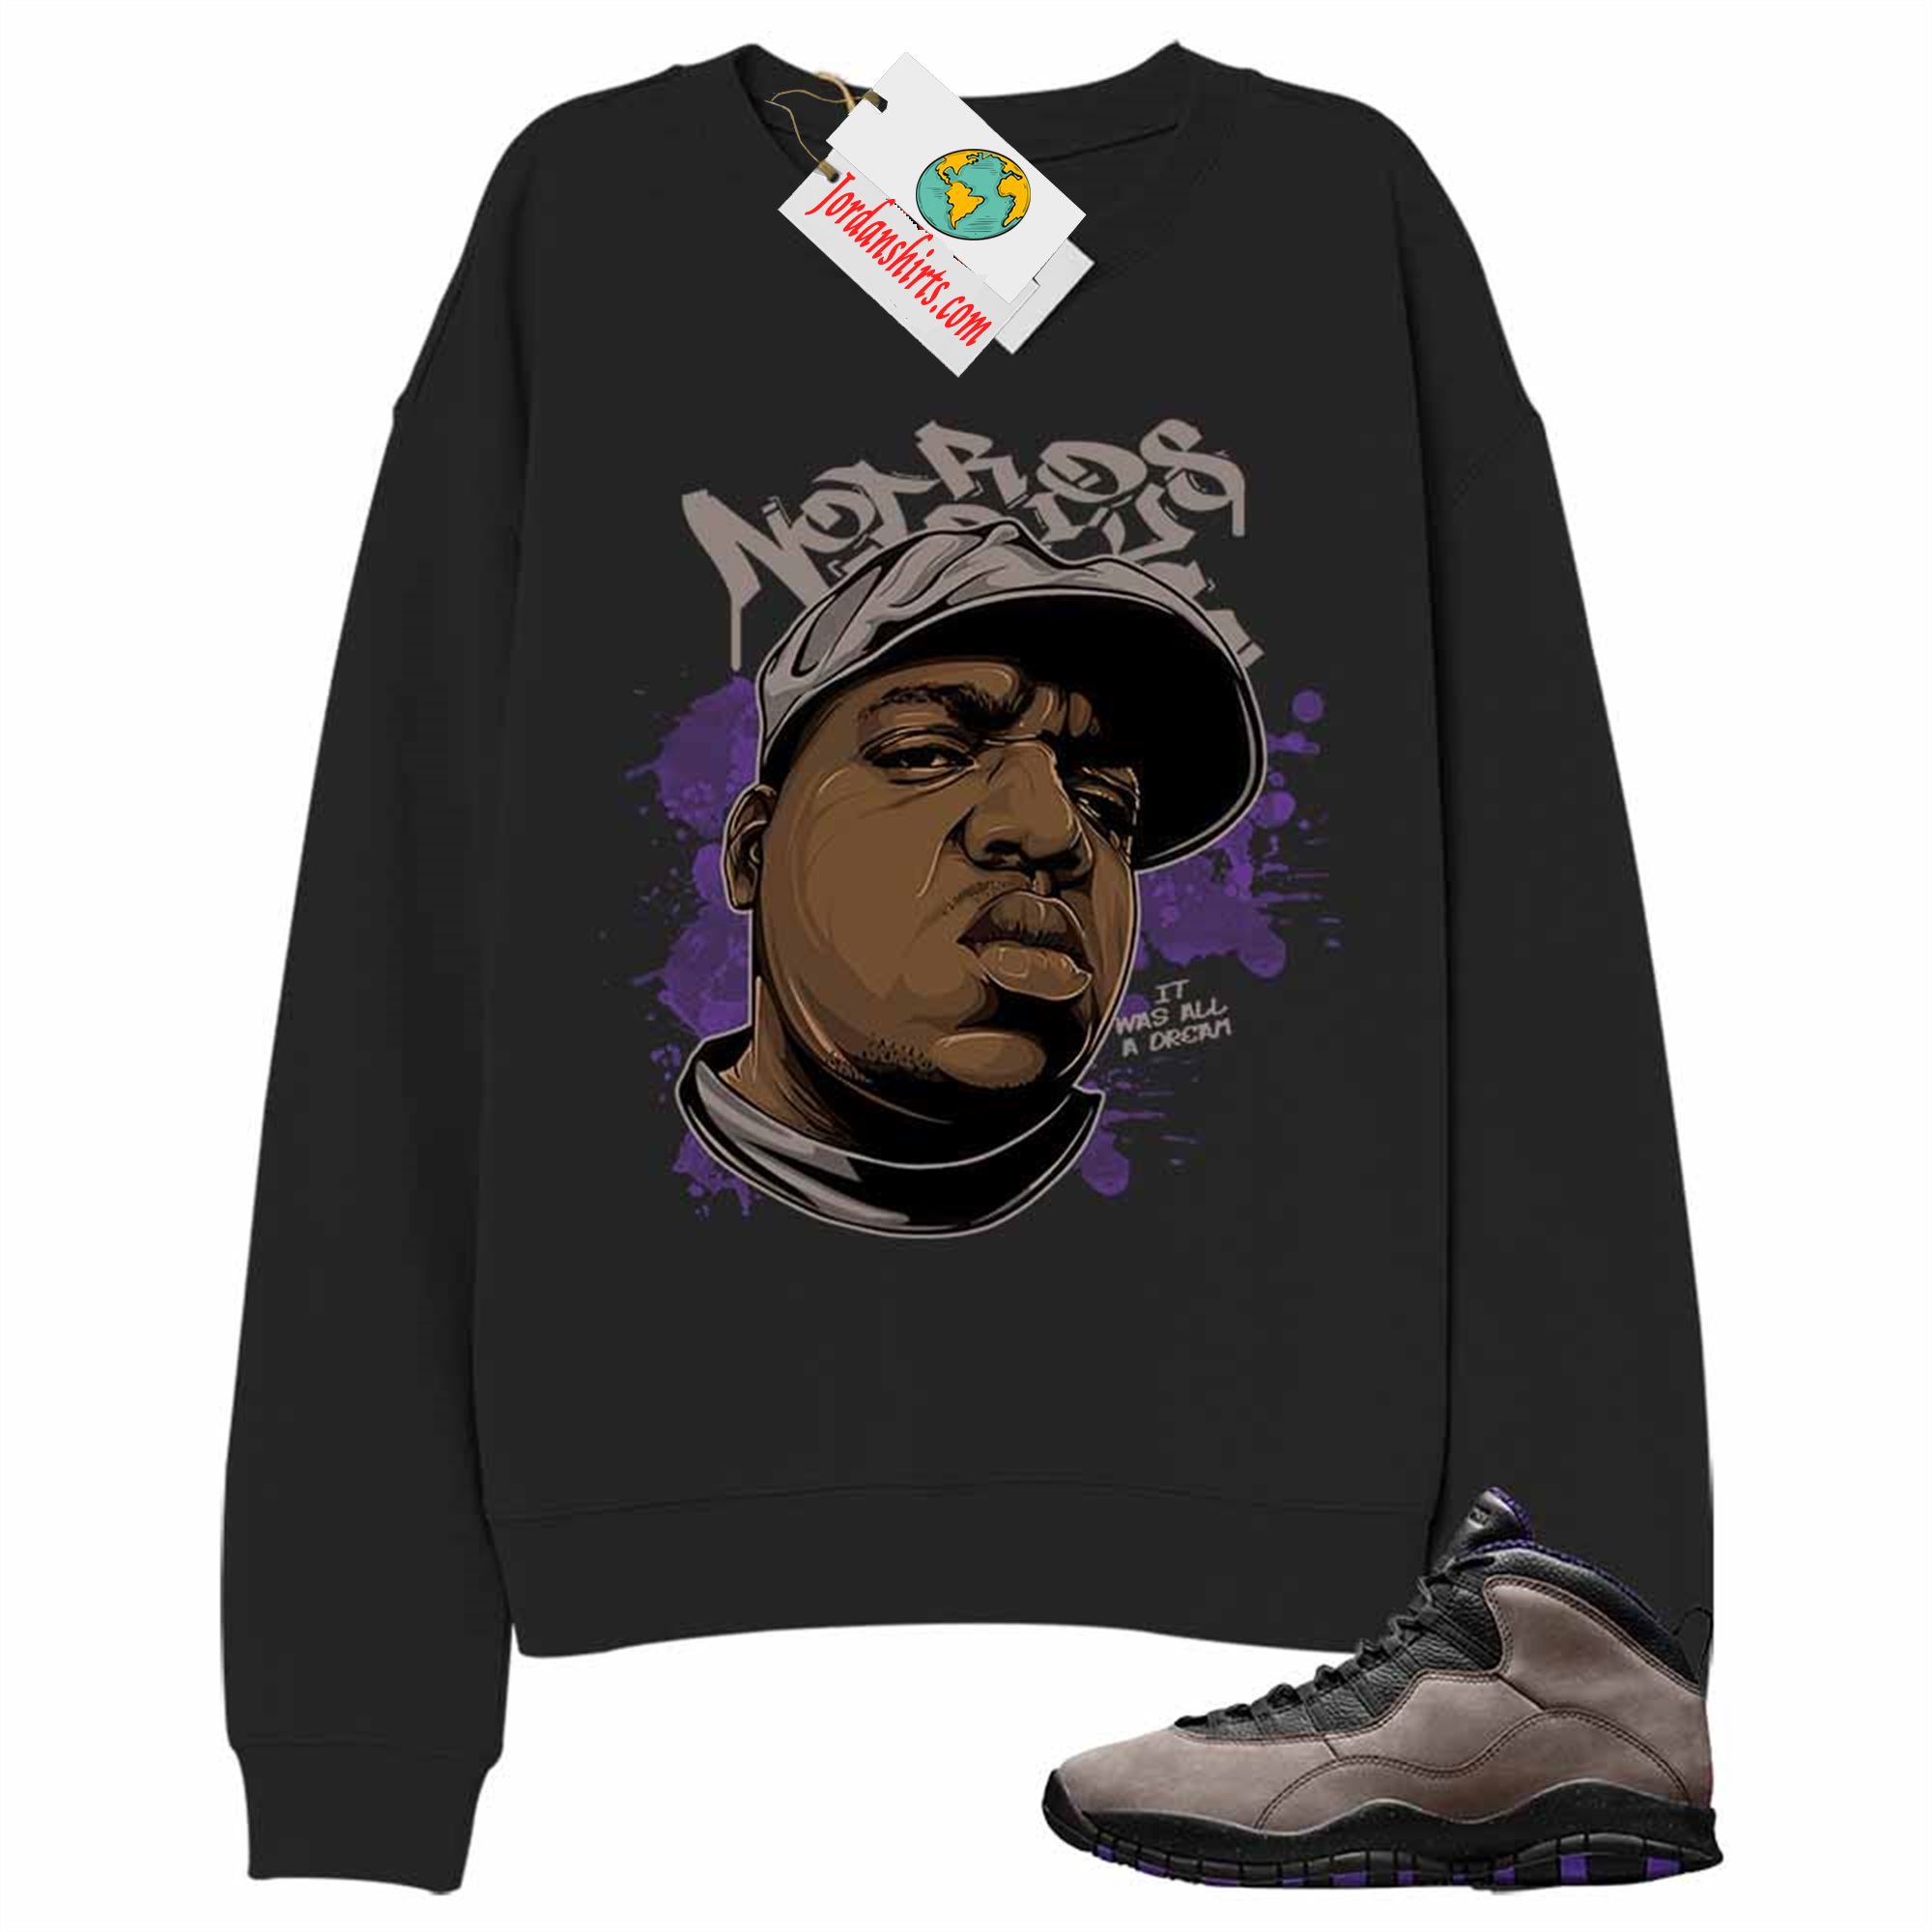 Jordan 10 Sweatshirt, Notorious Big Black Sweatshirt Air Jordan 10 Dark Mocha 10s Size Up To 5xl